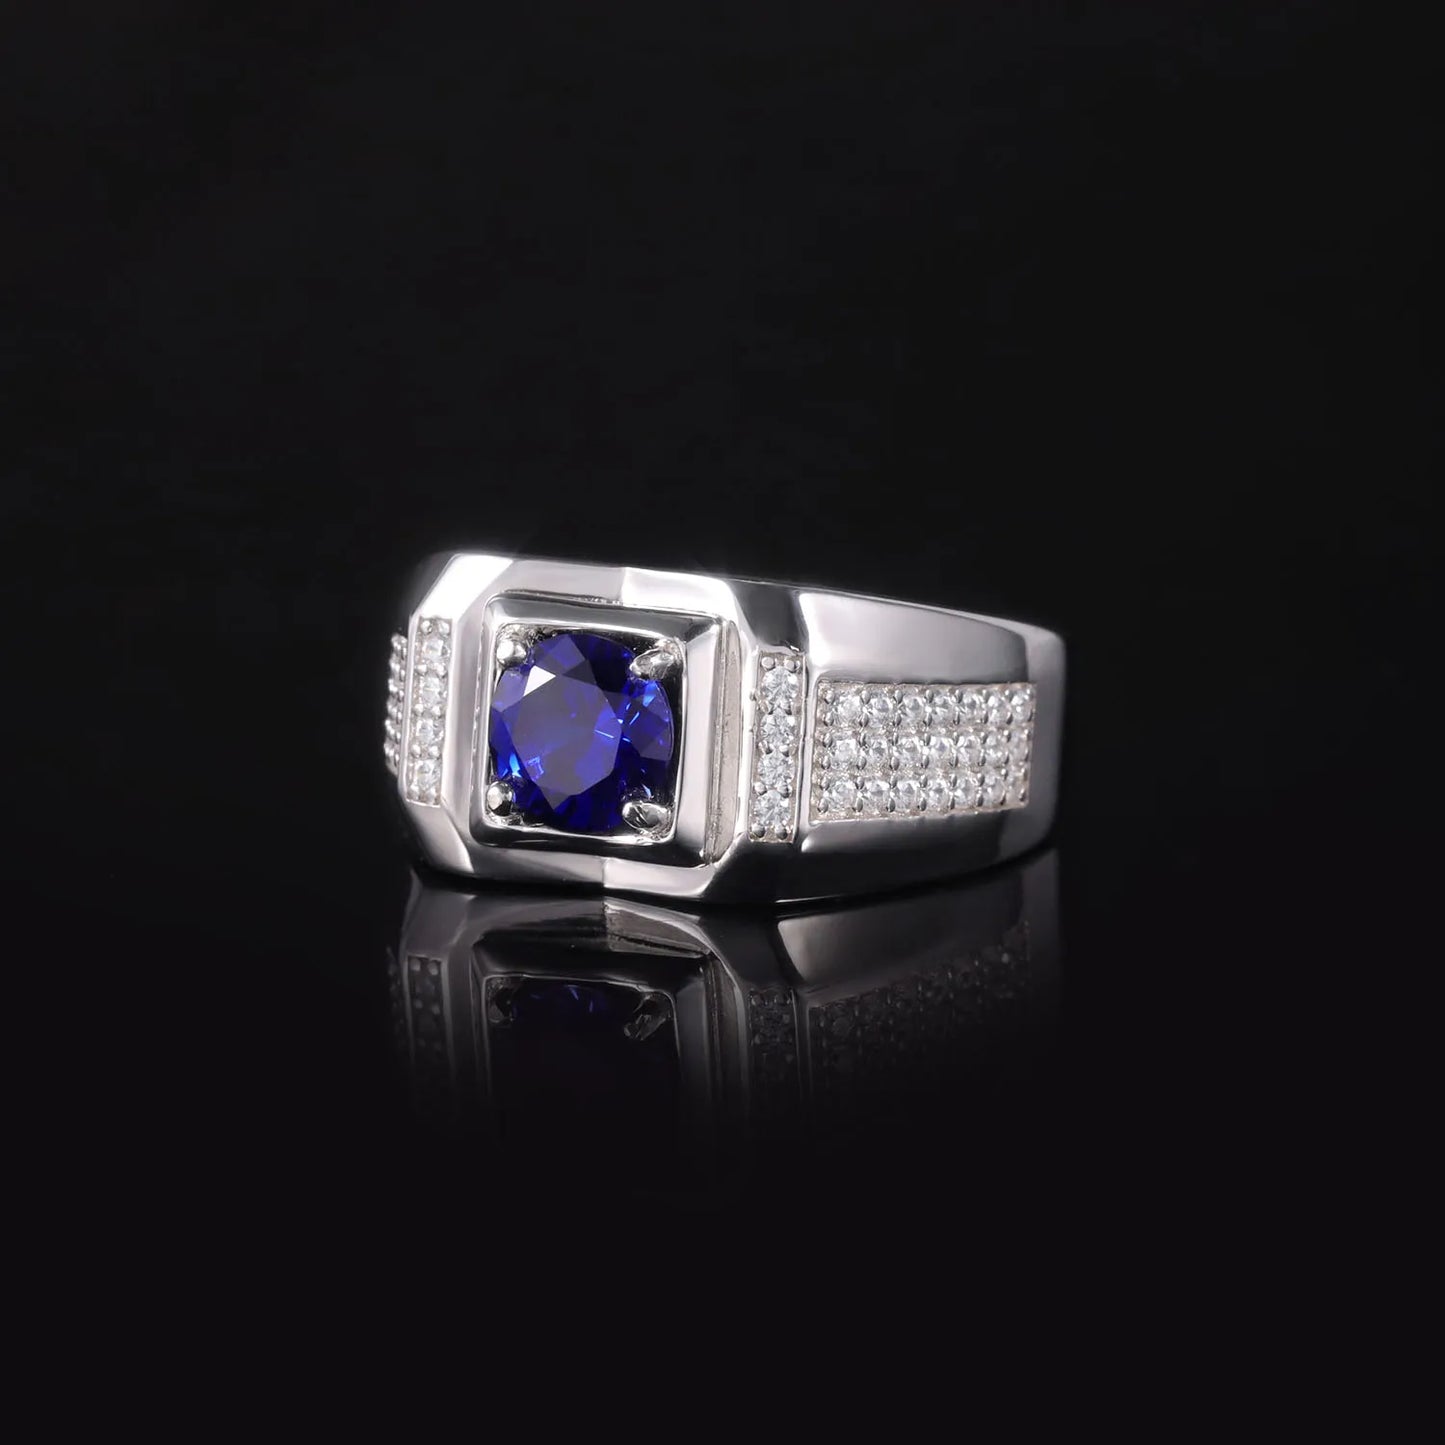 GEM'S BALLET 925 Sterling Silver Blue Sapphire Ring For Men Wedding 6.5mm 1.37Ct Round Lab Grown Sapphire Men's Statement Ring